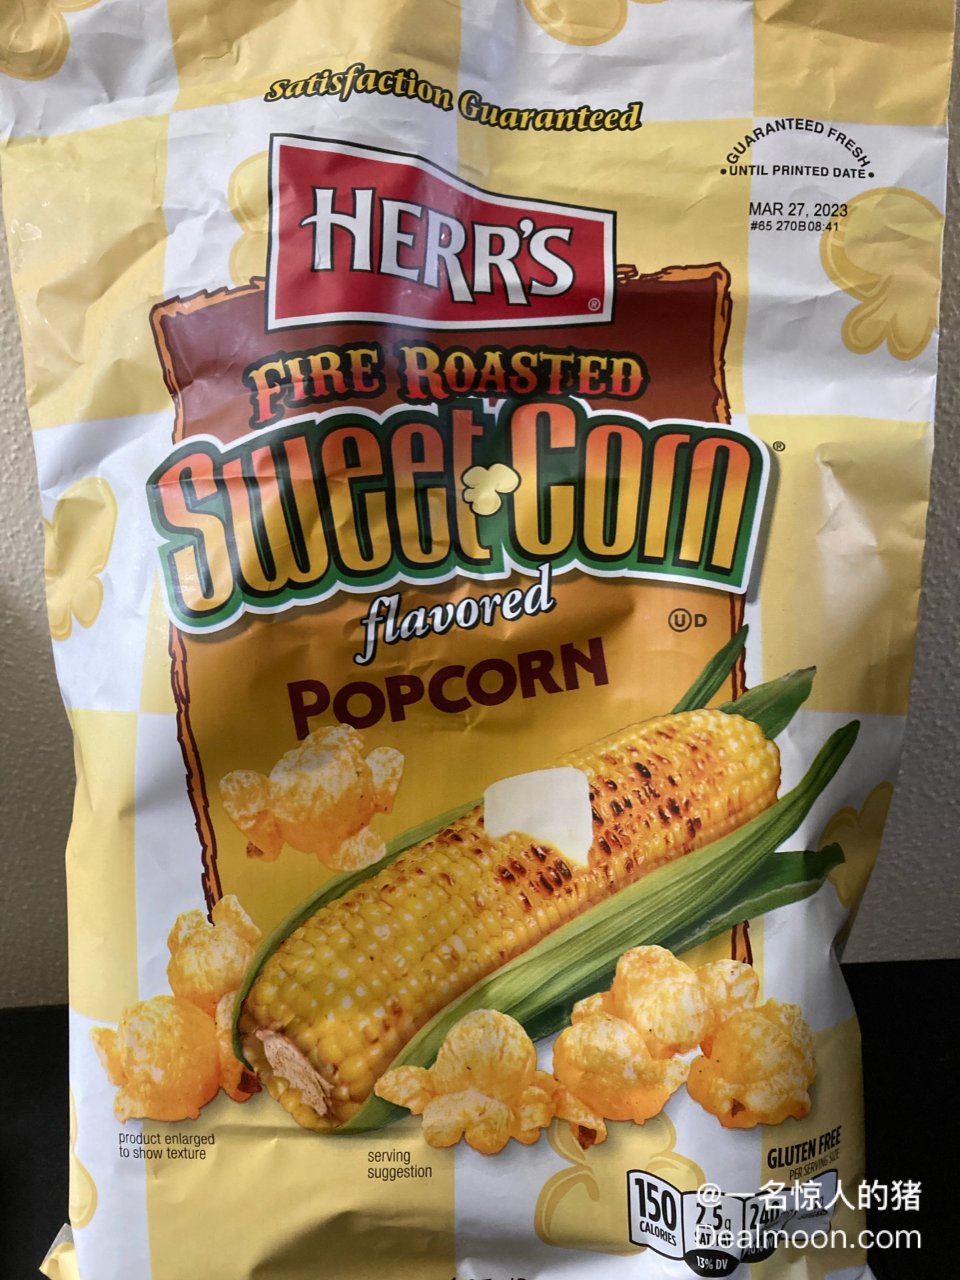 Herr's Sweet Corn Popcorn, 11 oz. - BJs Wholesale Club,BJ's